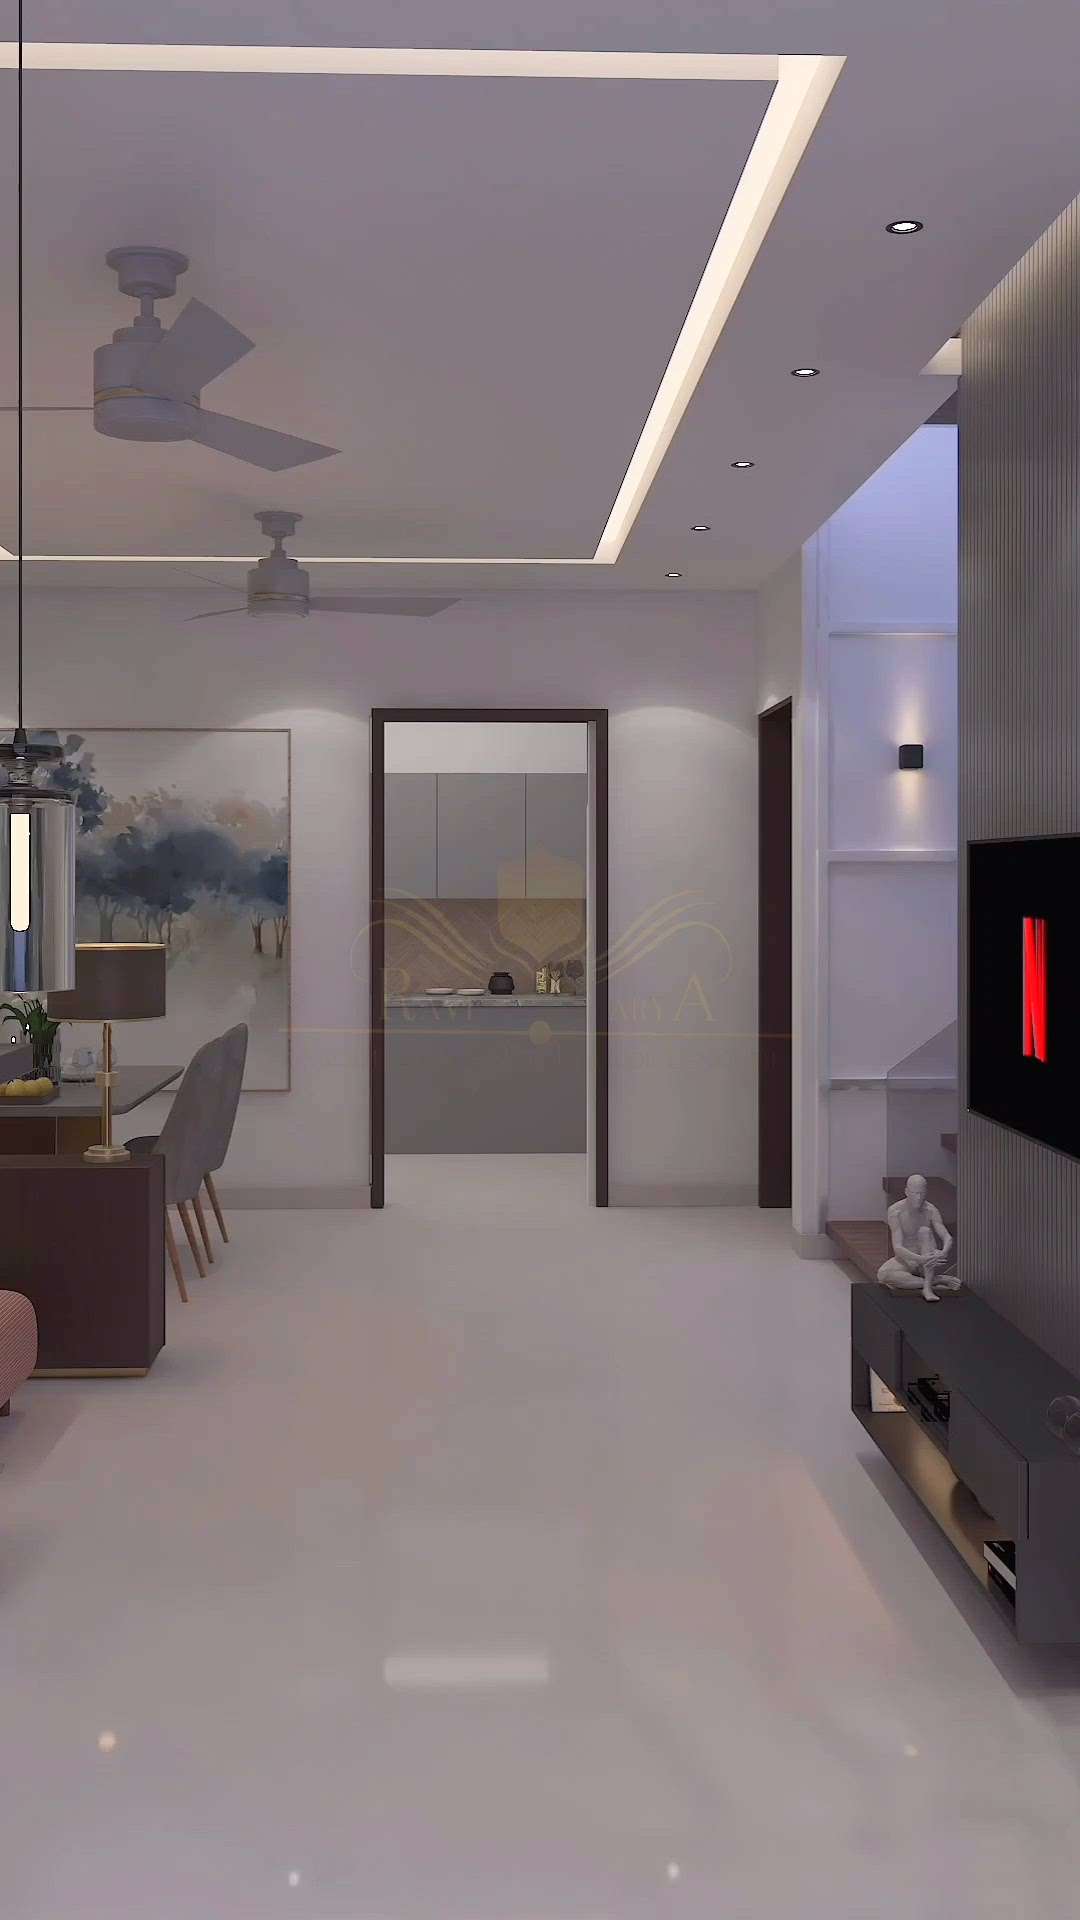 3d walkthrough animation of living dining area...!!
#walkthrough #animation #3dwalkthrough #3danimation #rendering #renderingdesign  #LivingroomDesigns #diningroomdesign #happynewyear